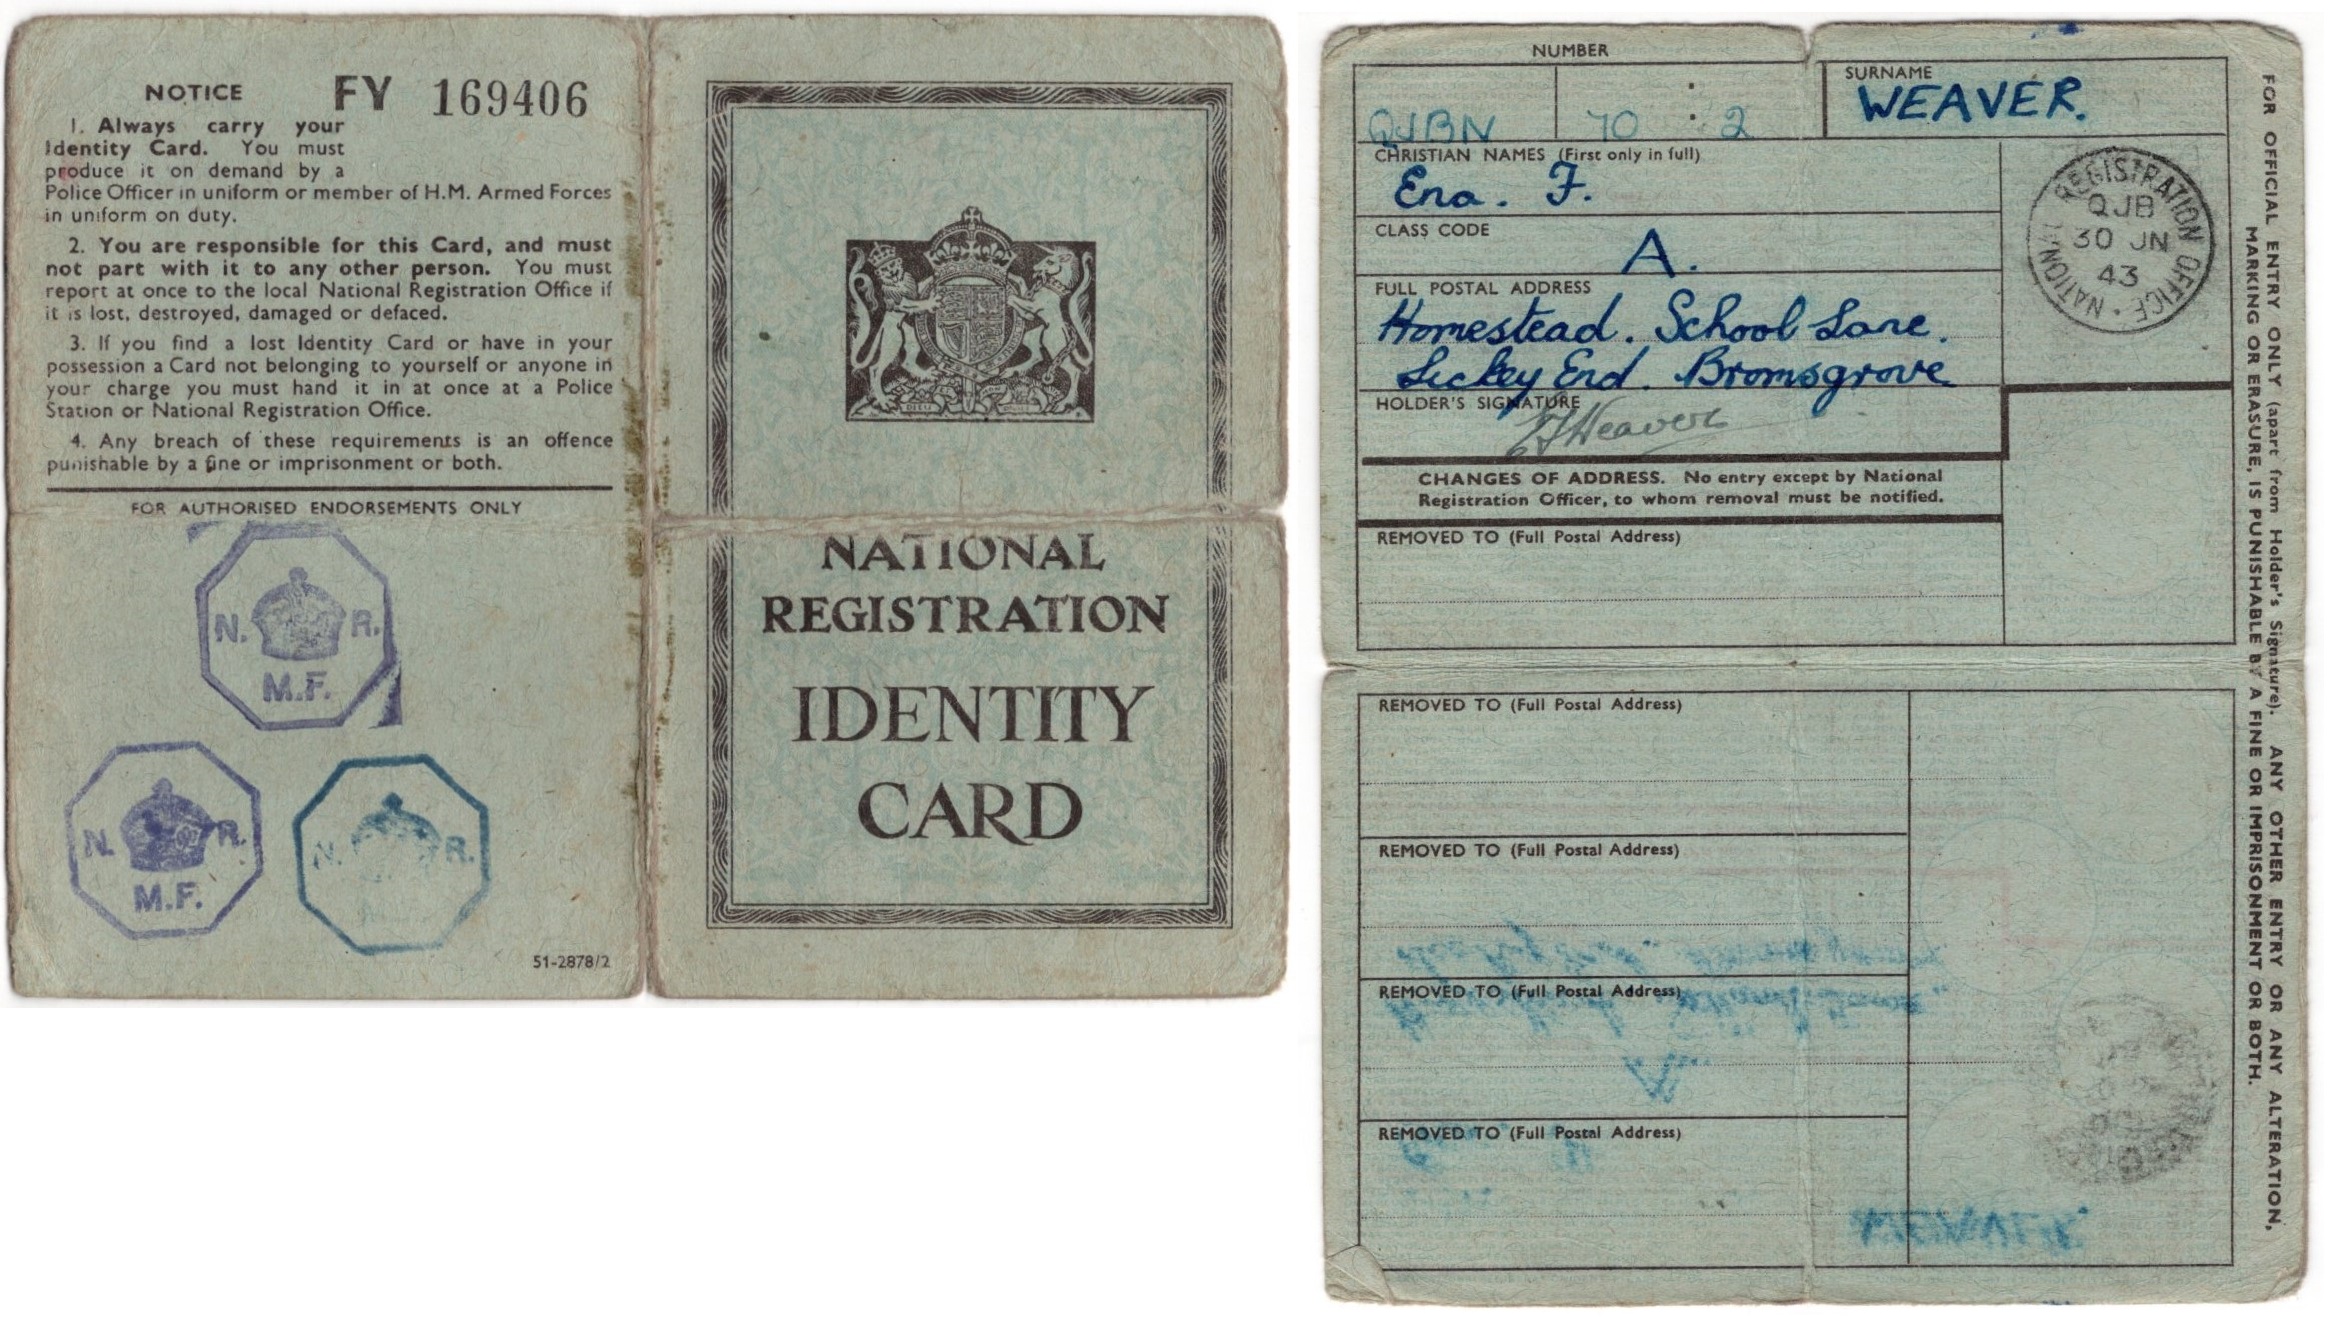 National Registration Identity Card - Ena F Weaver - 1943